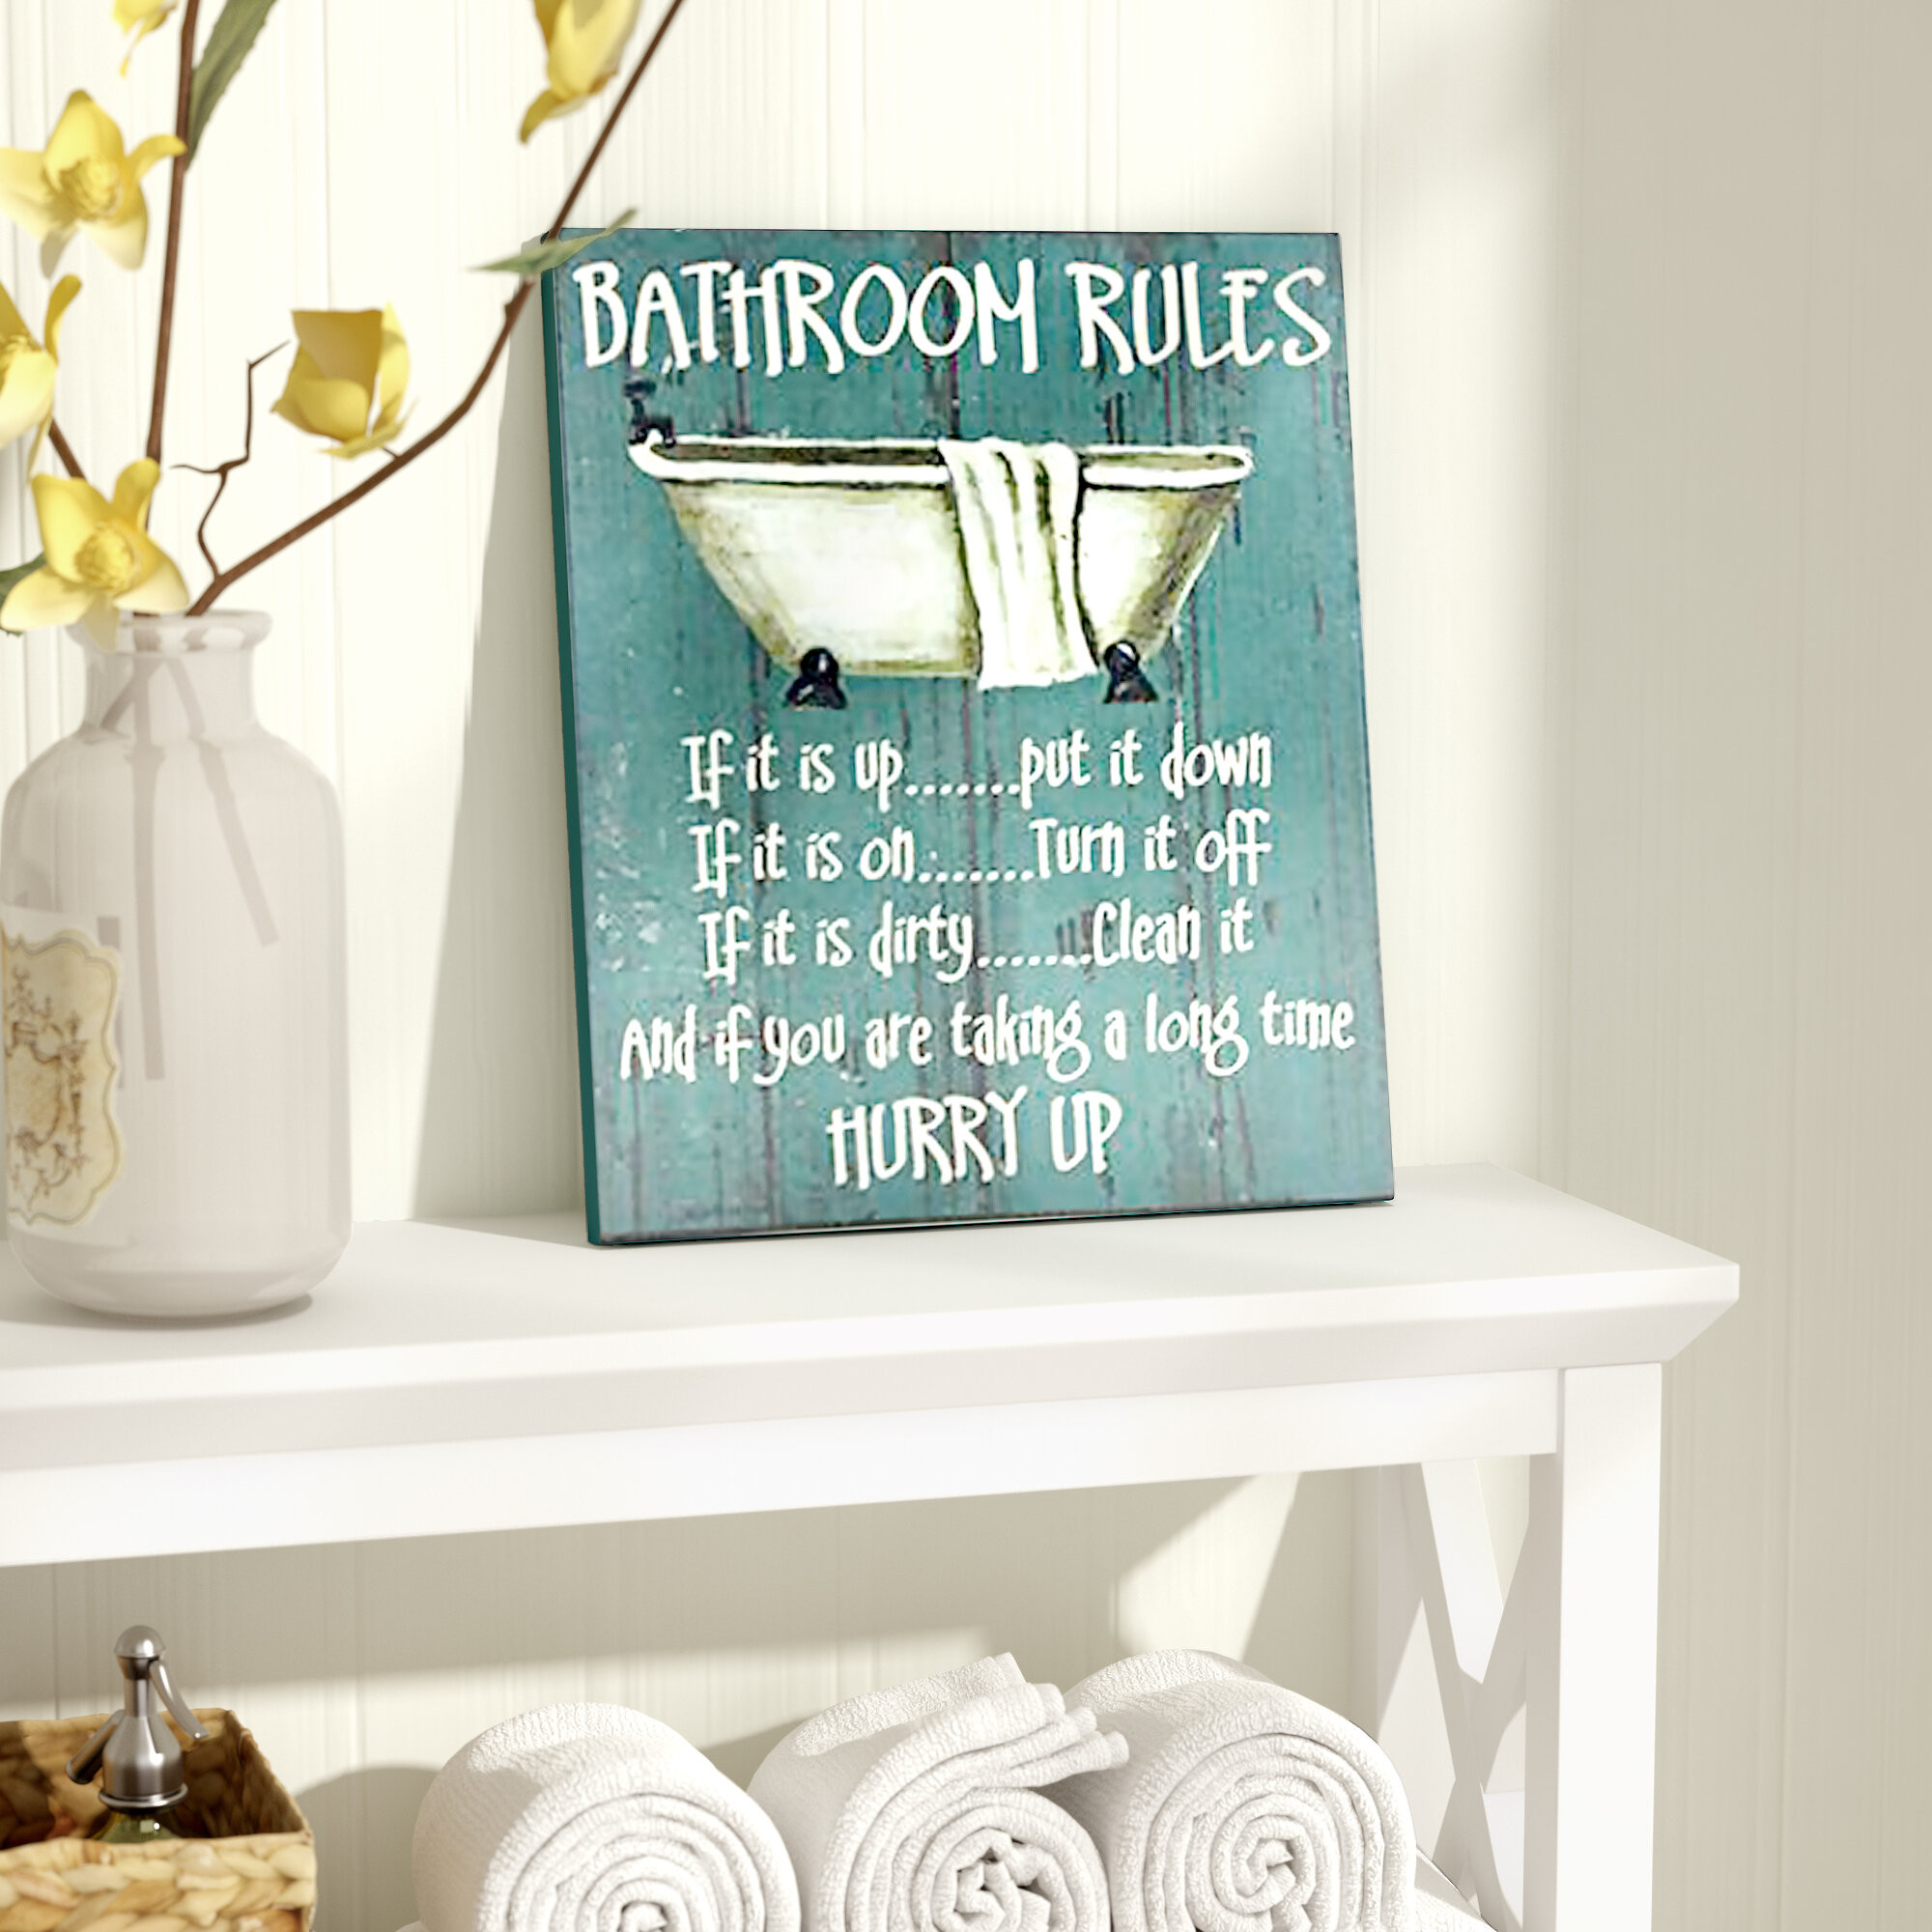 Bathroom Wall Hangings
 August Grove Bathroom Rules Textual Art & Reviews